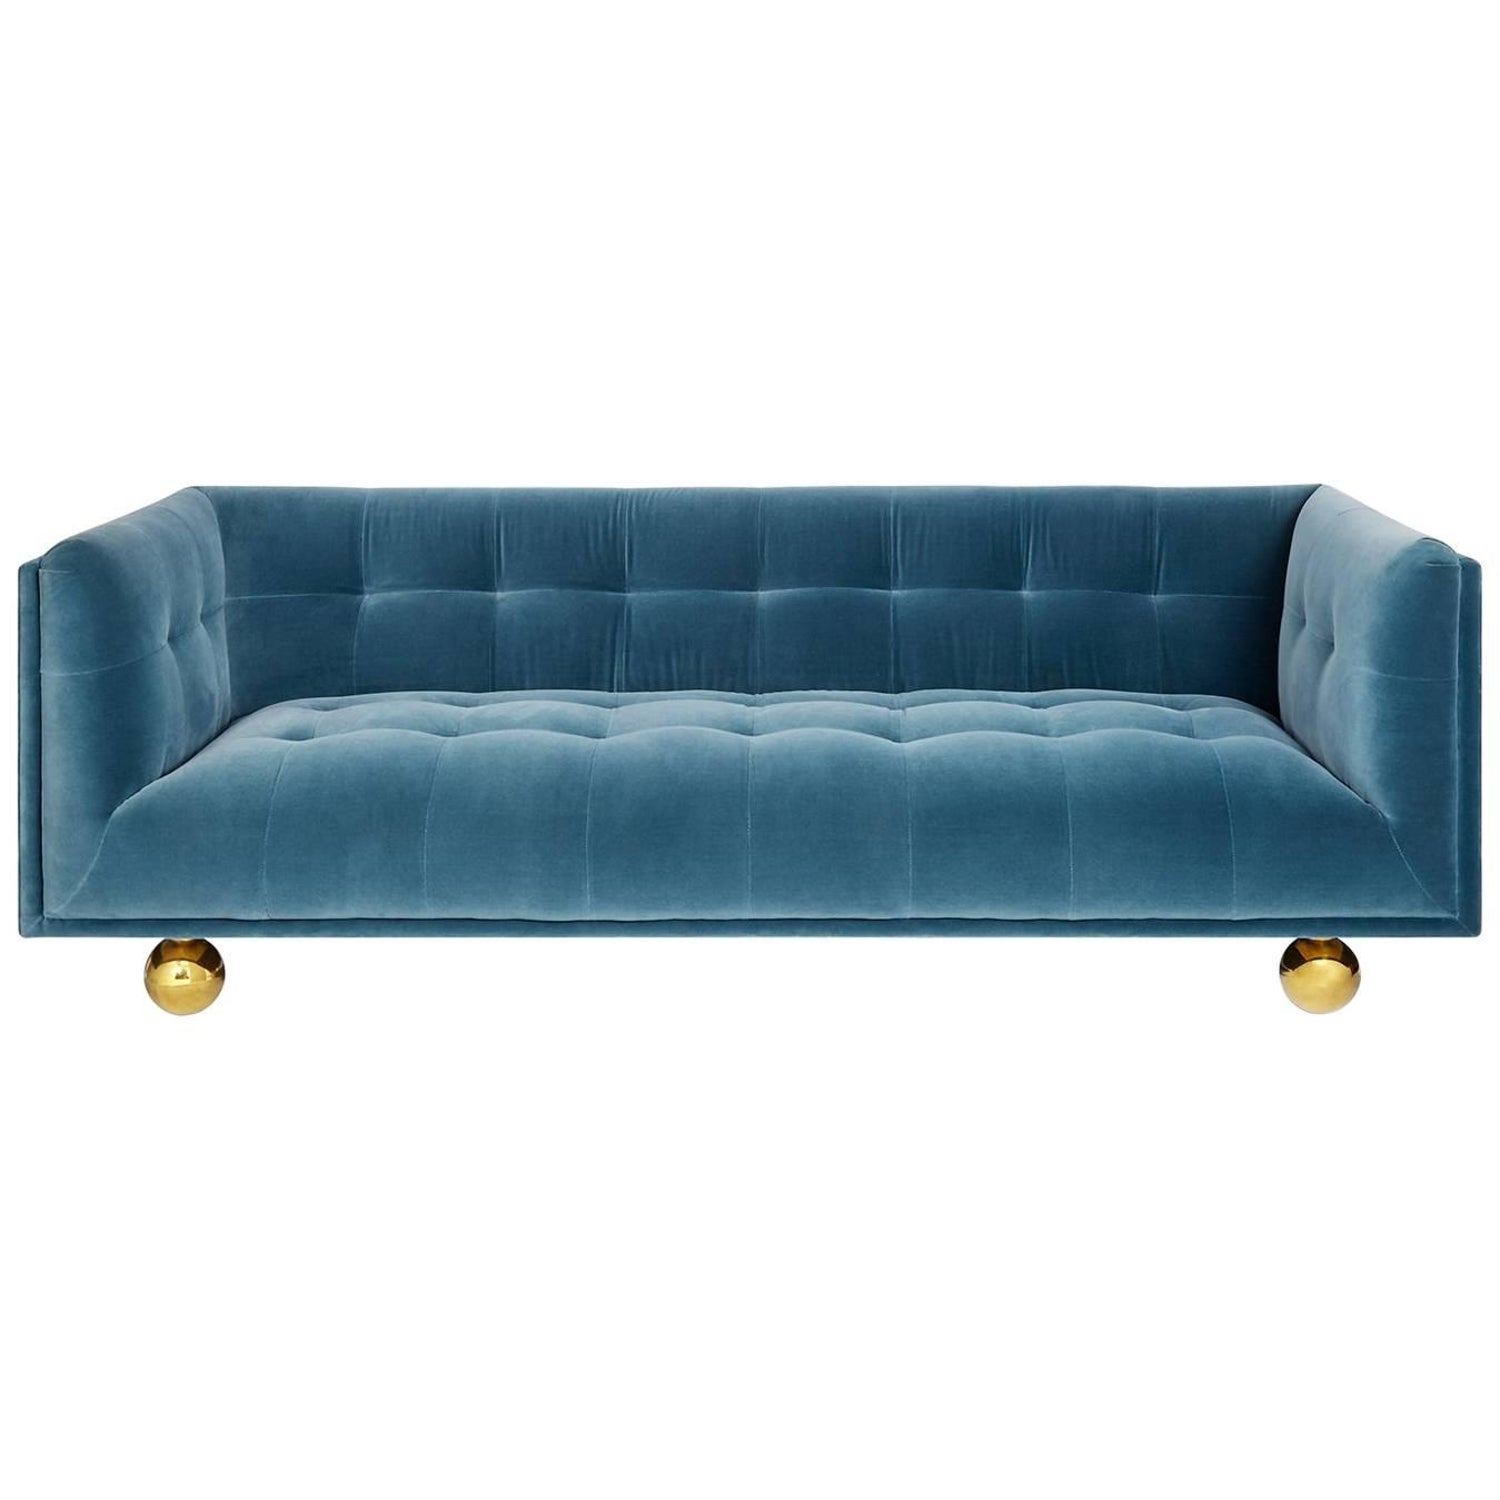 Bespoke Blue Velvet Chesterfield Sofa By Pitfield London For Sale